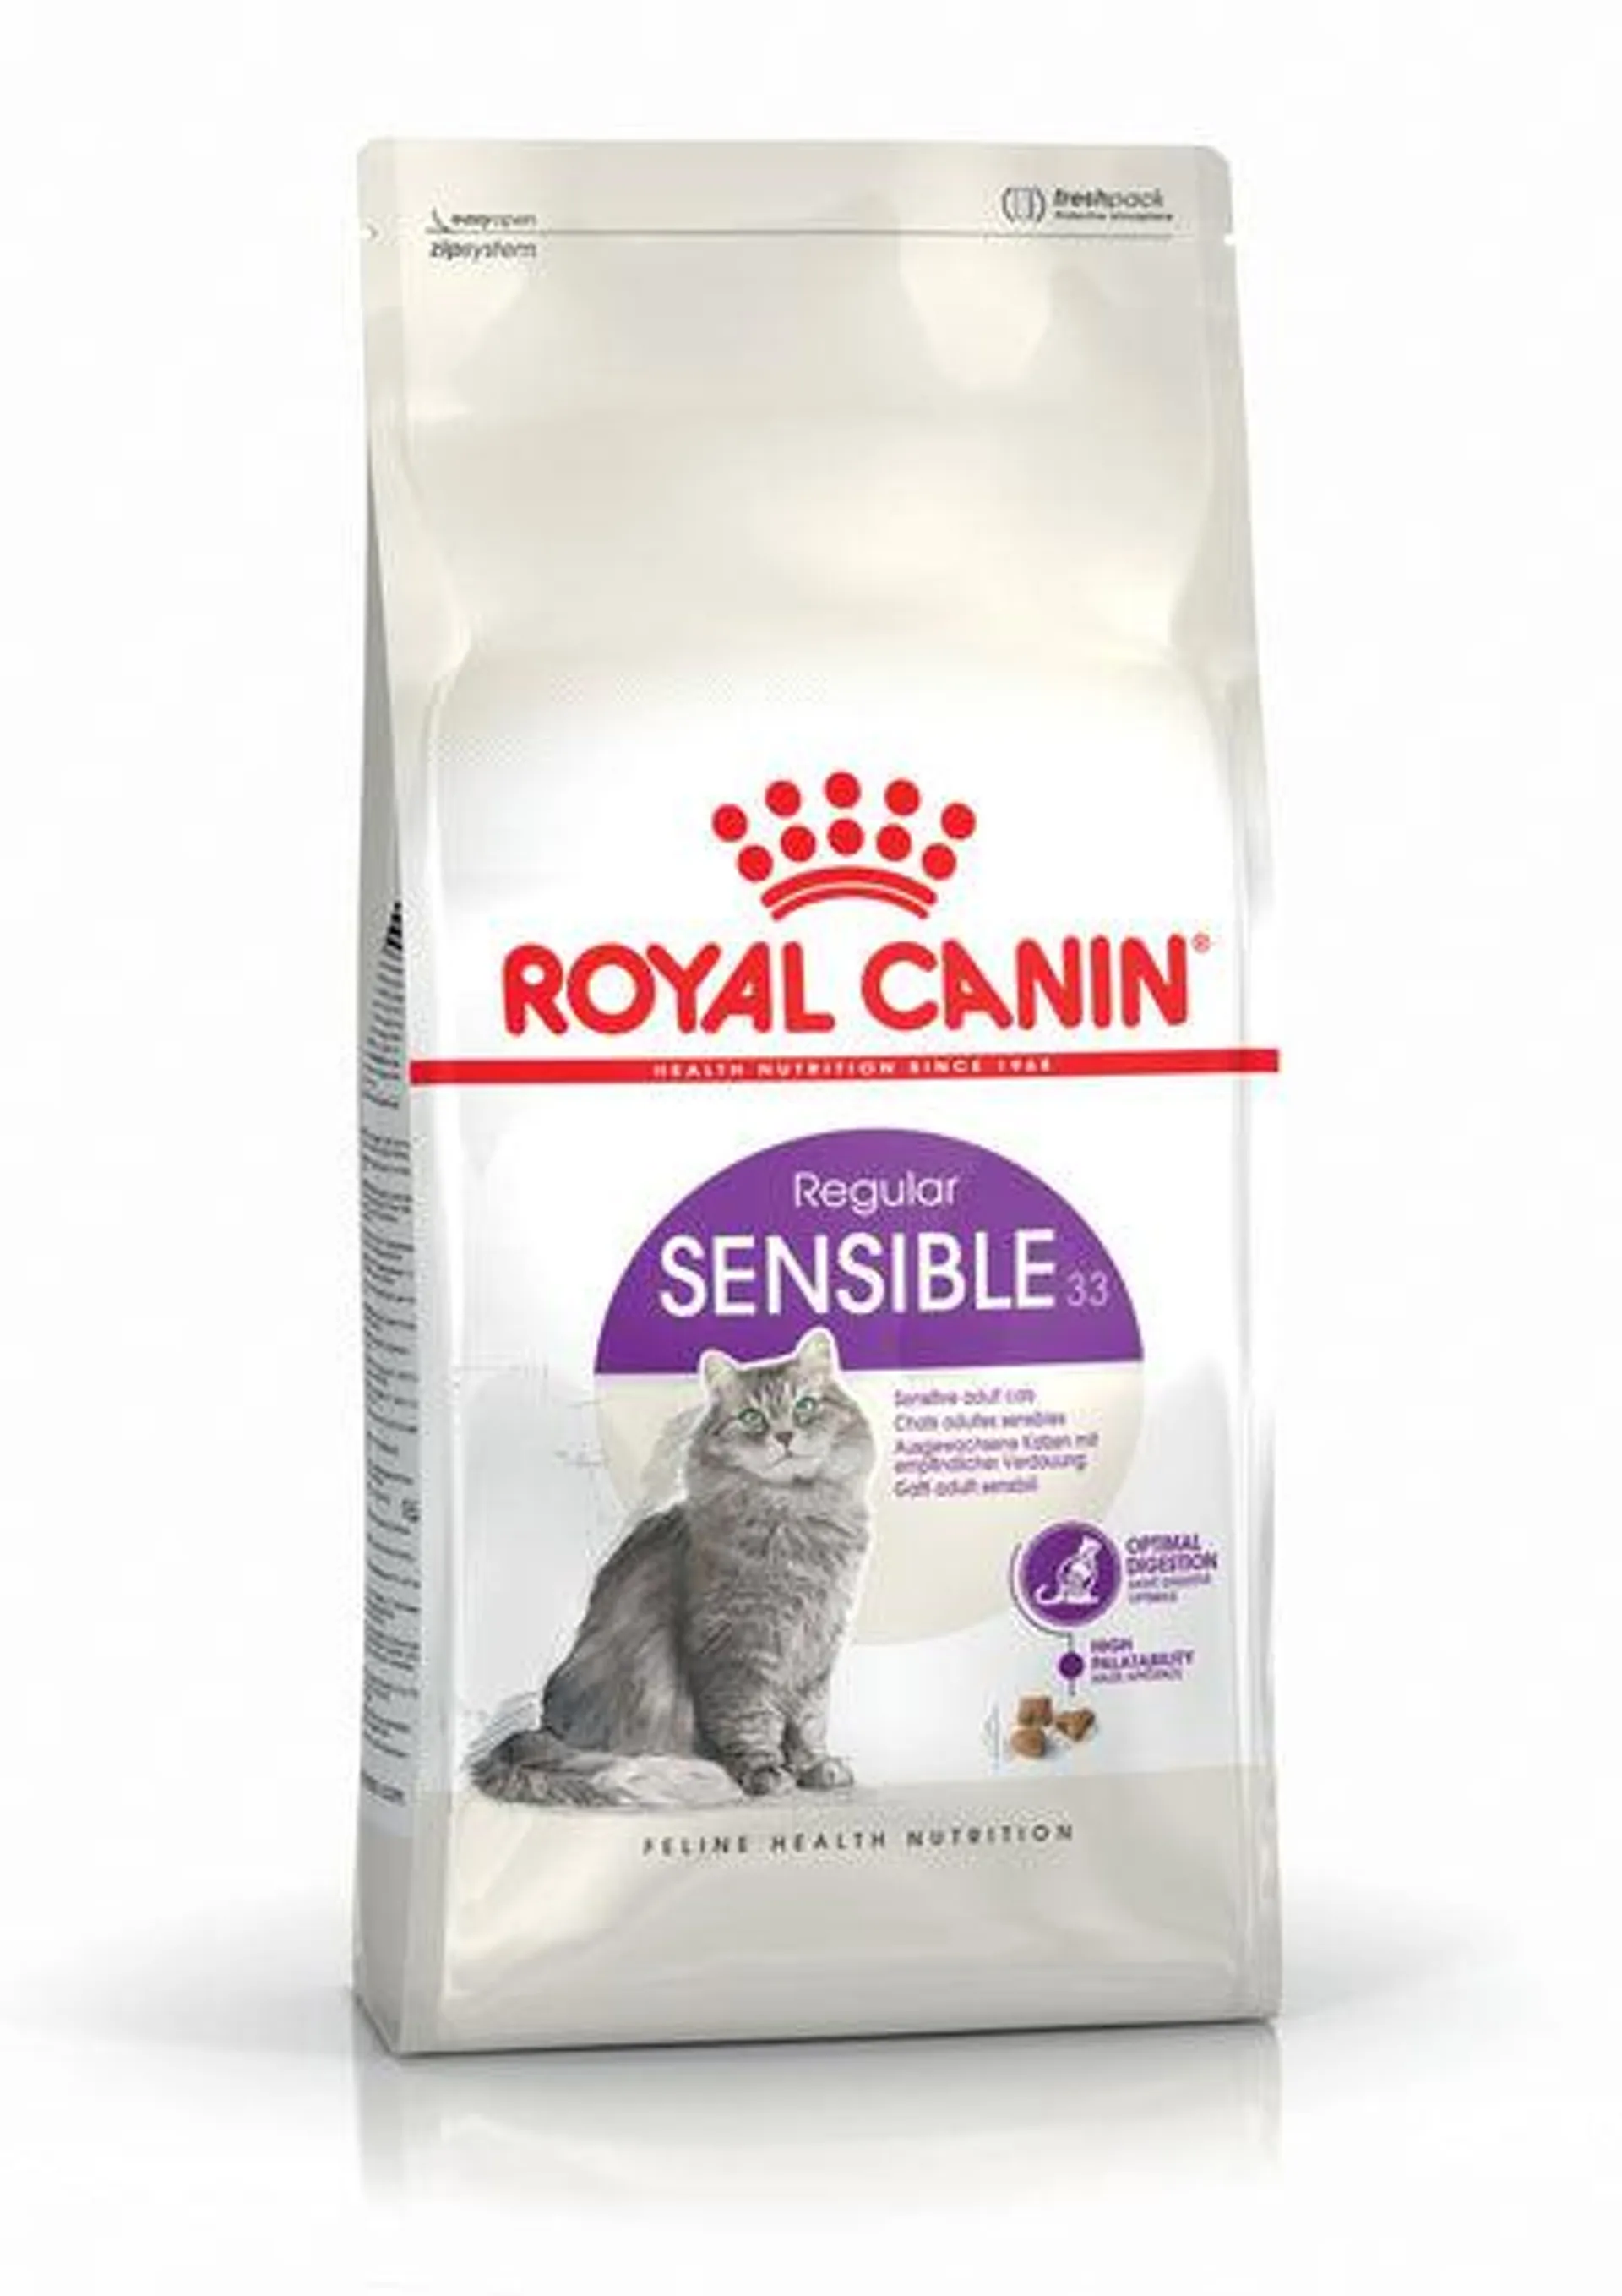 Royal Canin - Sensible Adult Cat Dry Food (4kg)